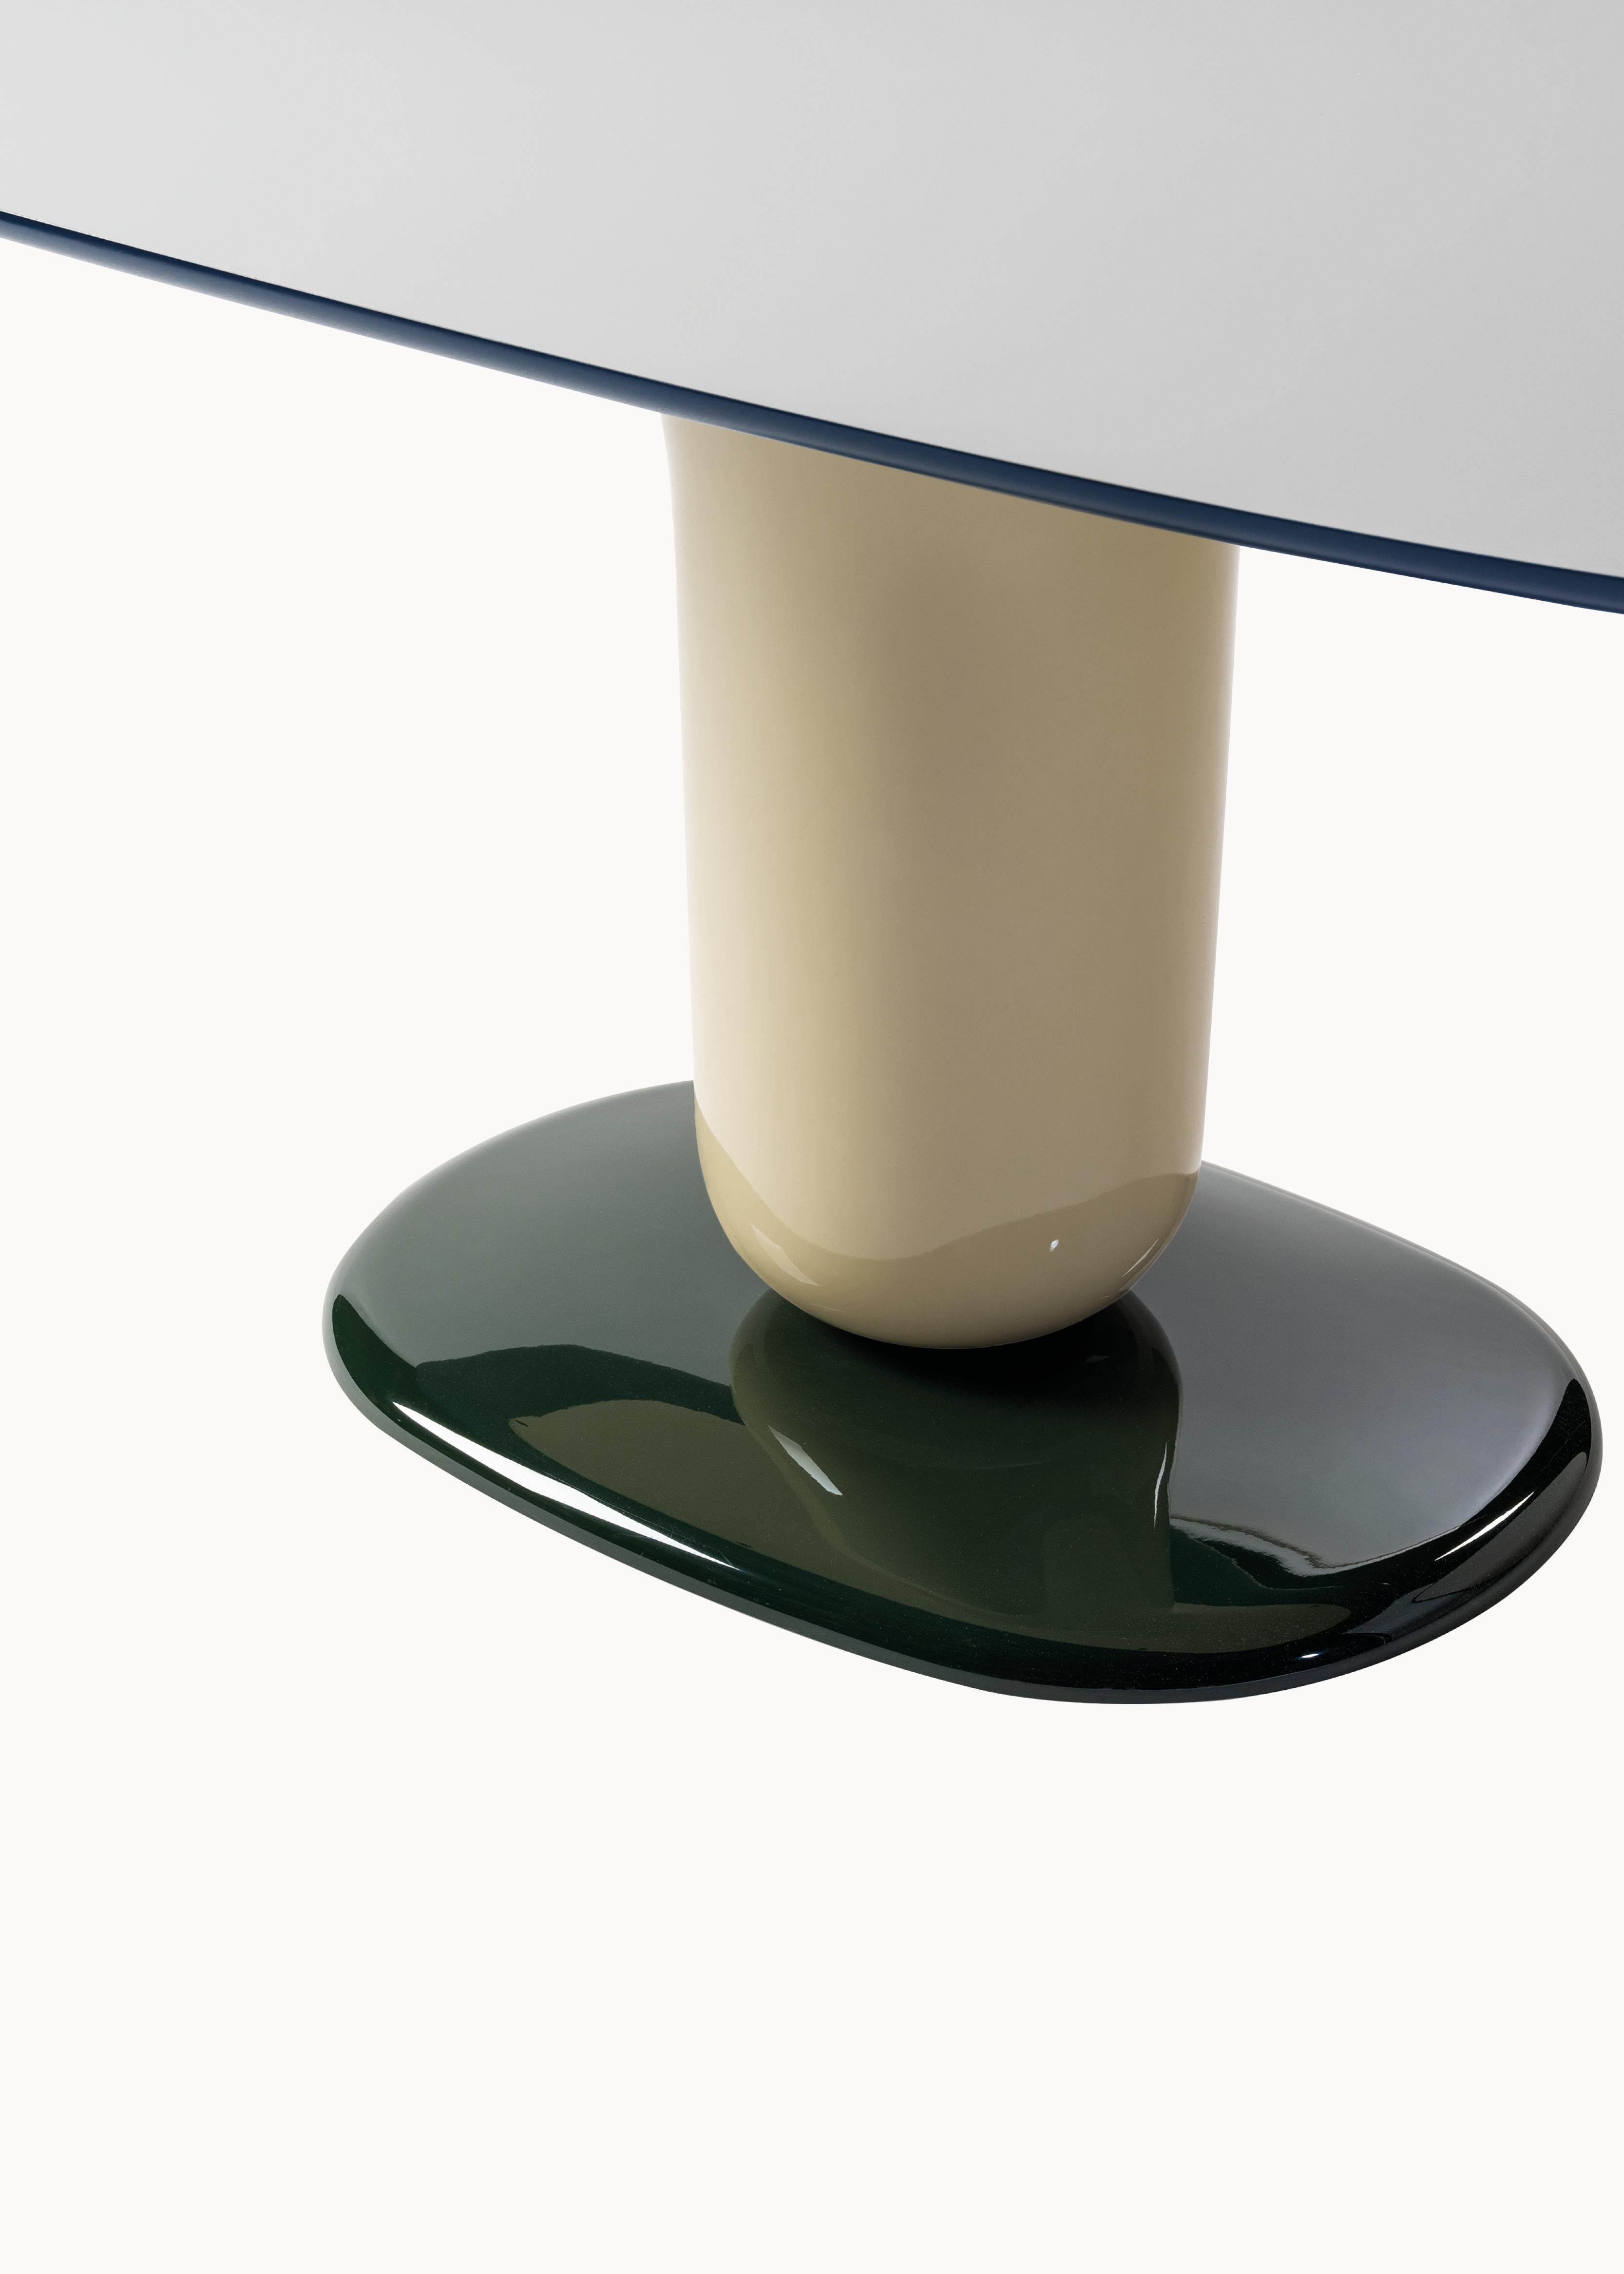 Explorer Dining Table by Jaime Hayon, 2023
Model Multicolor Beige - EXPLORER 5B (220 CM) (TOP FENIX)
Dimensions: W. 220 x D. 100 x H. 73.5 cm (86,6 x 28,9 x 28,9 inch)

Finishes combinations: 
- Multicolor Blue: Laminated top Grey Perle, Underside